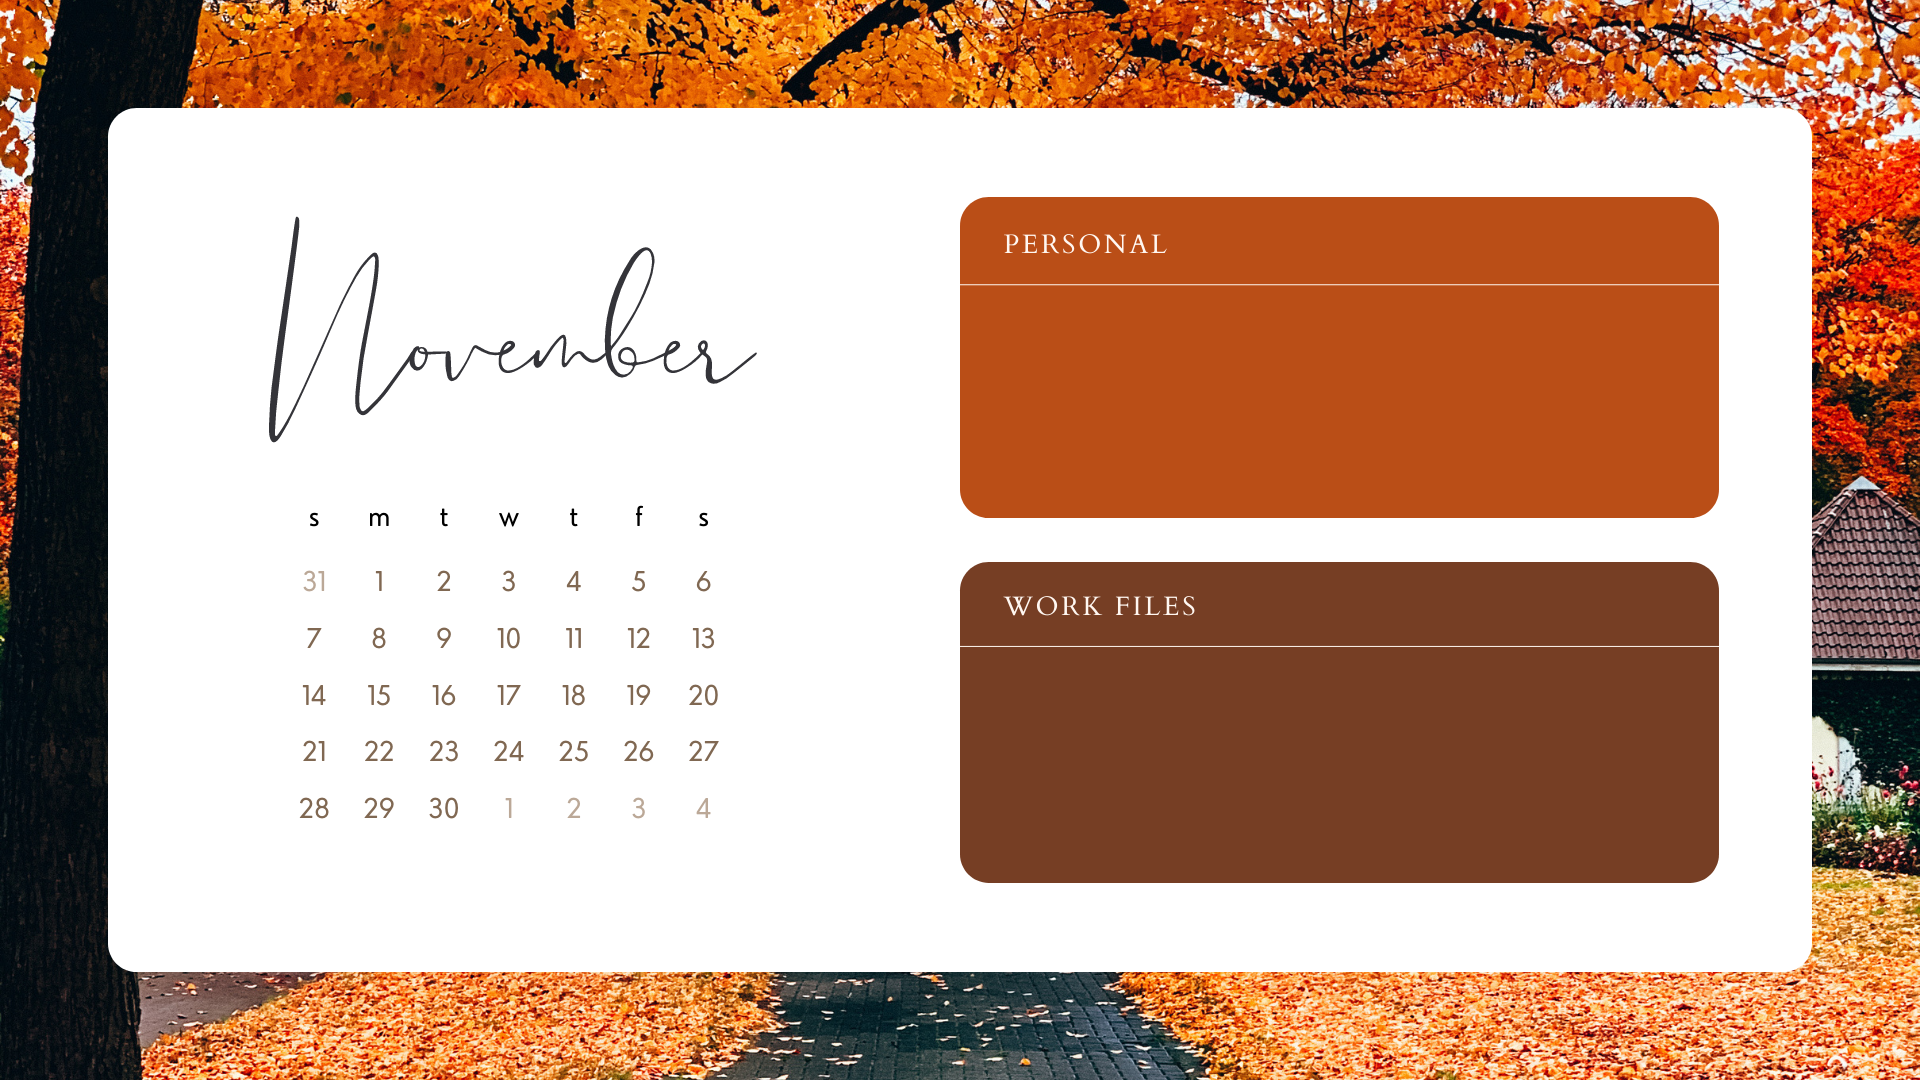 Beautiful Fall Foliage Nature Calendar Organizer Desktop Wallpaper.png